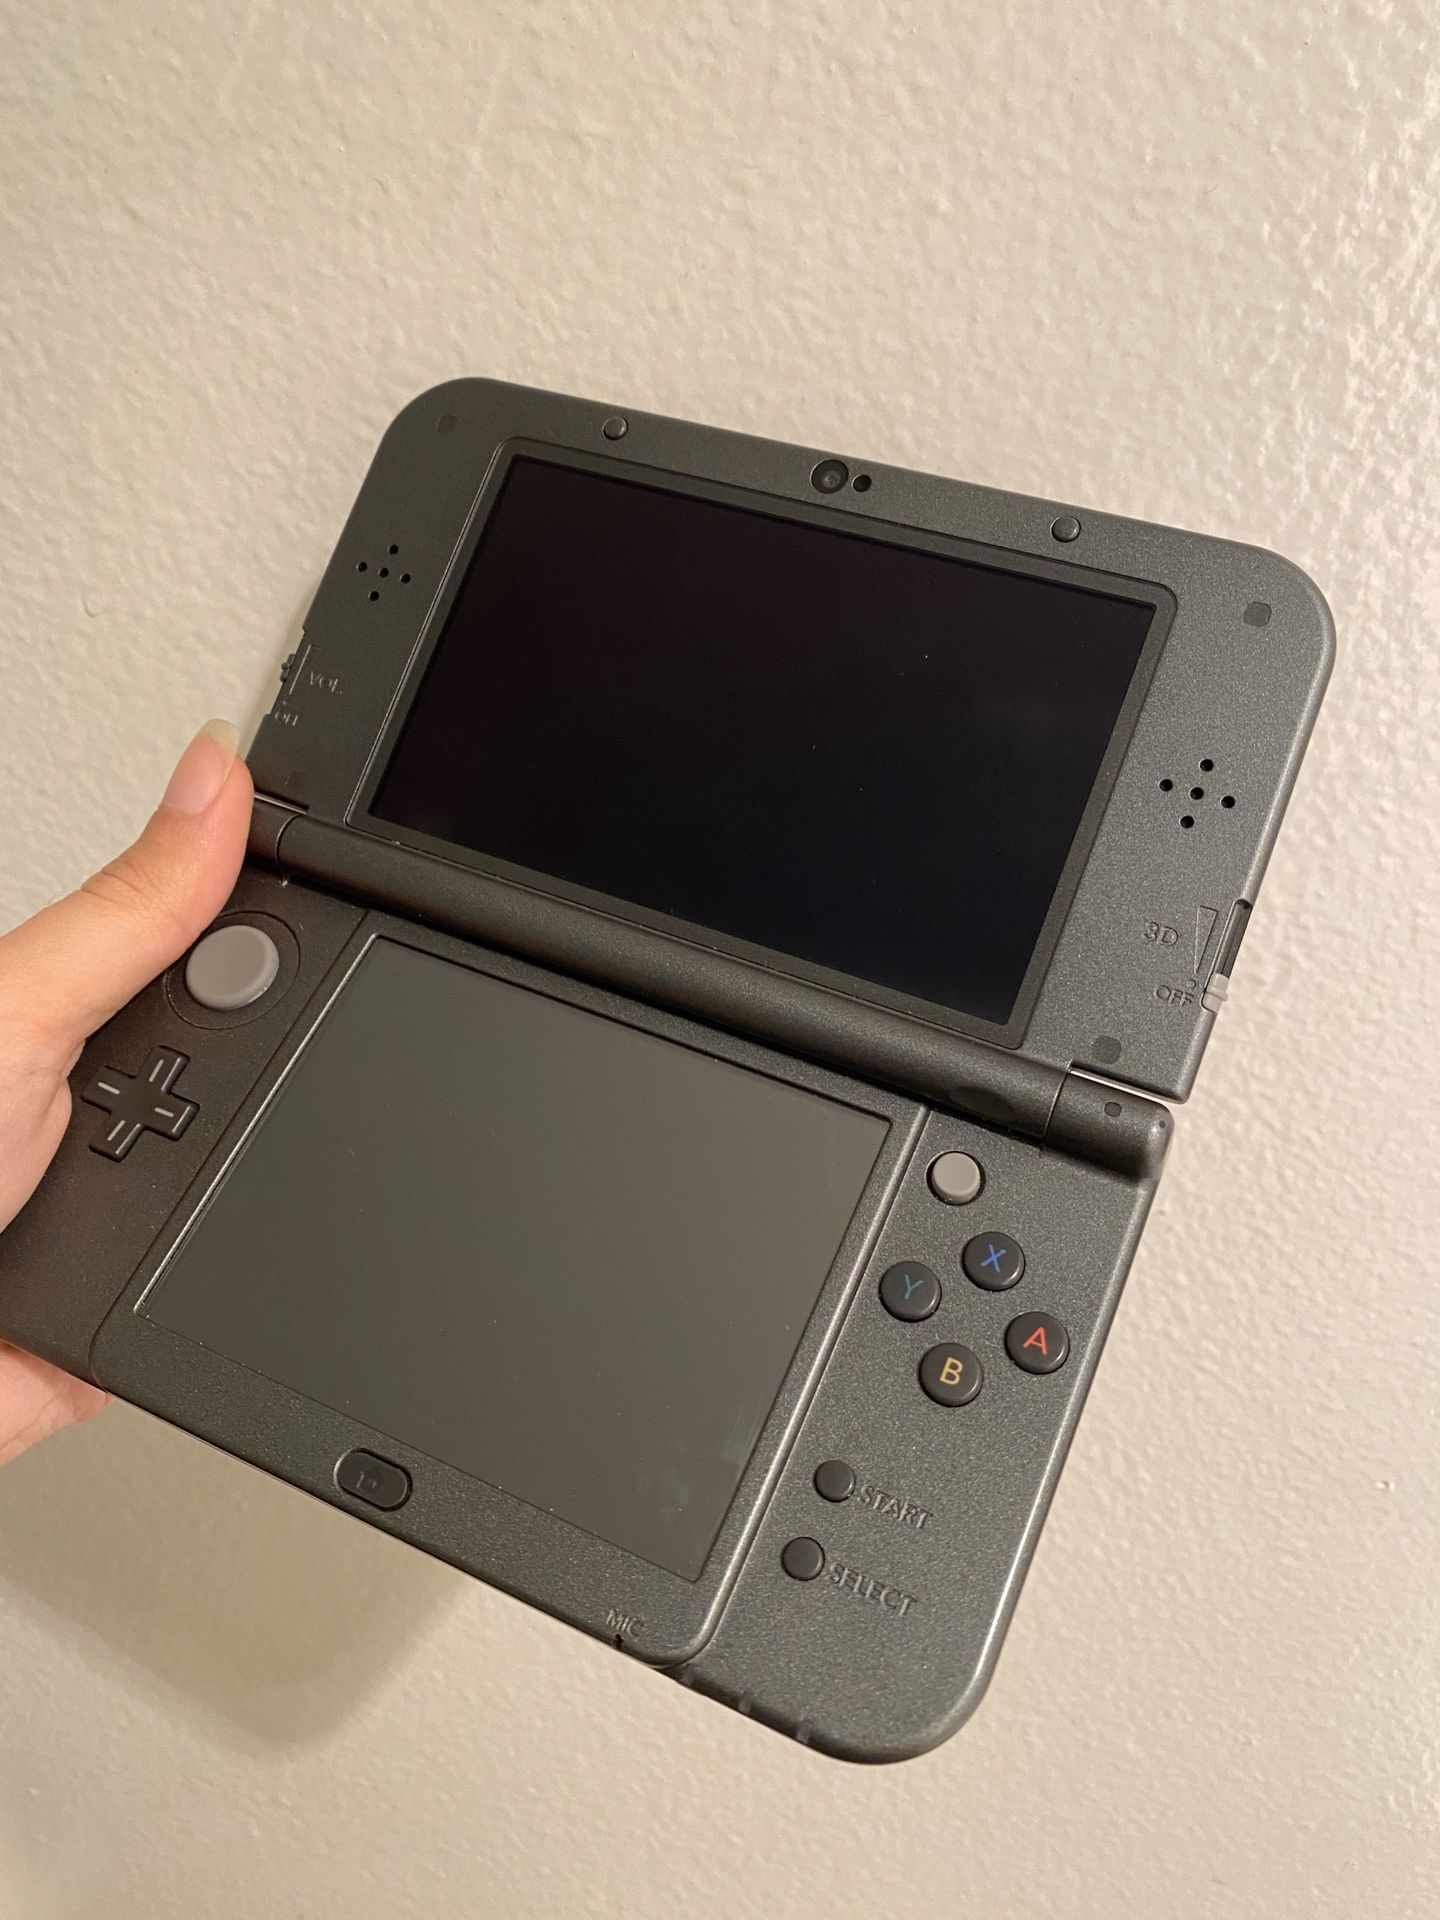 Nintendo 3DS XL Newest Version